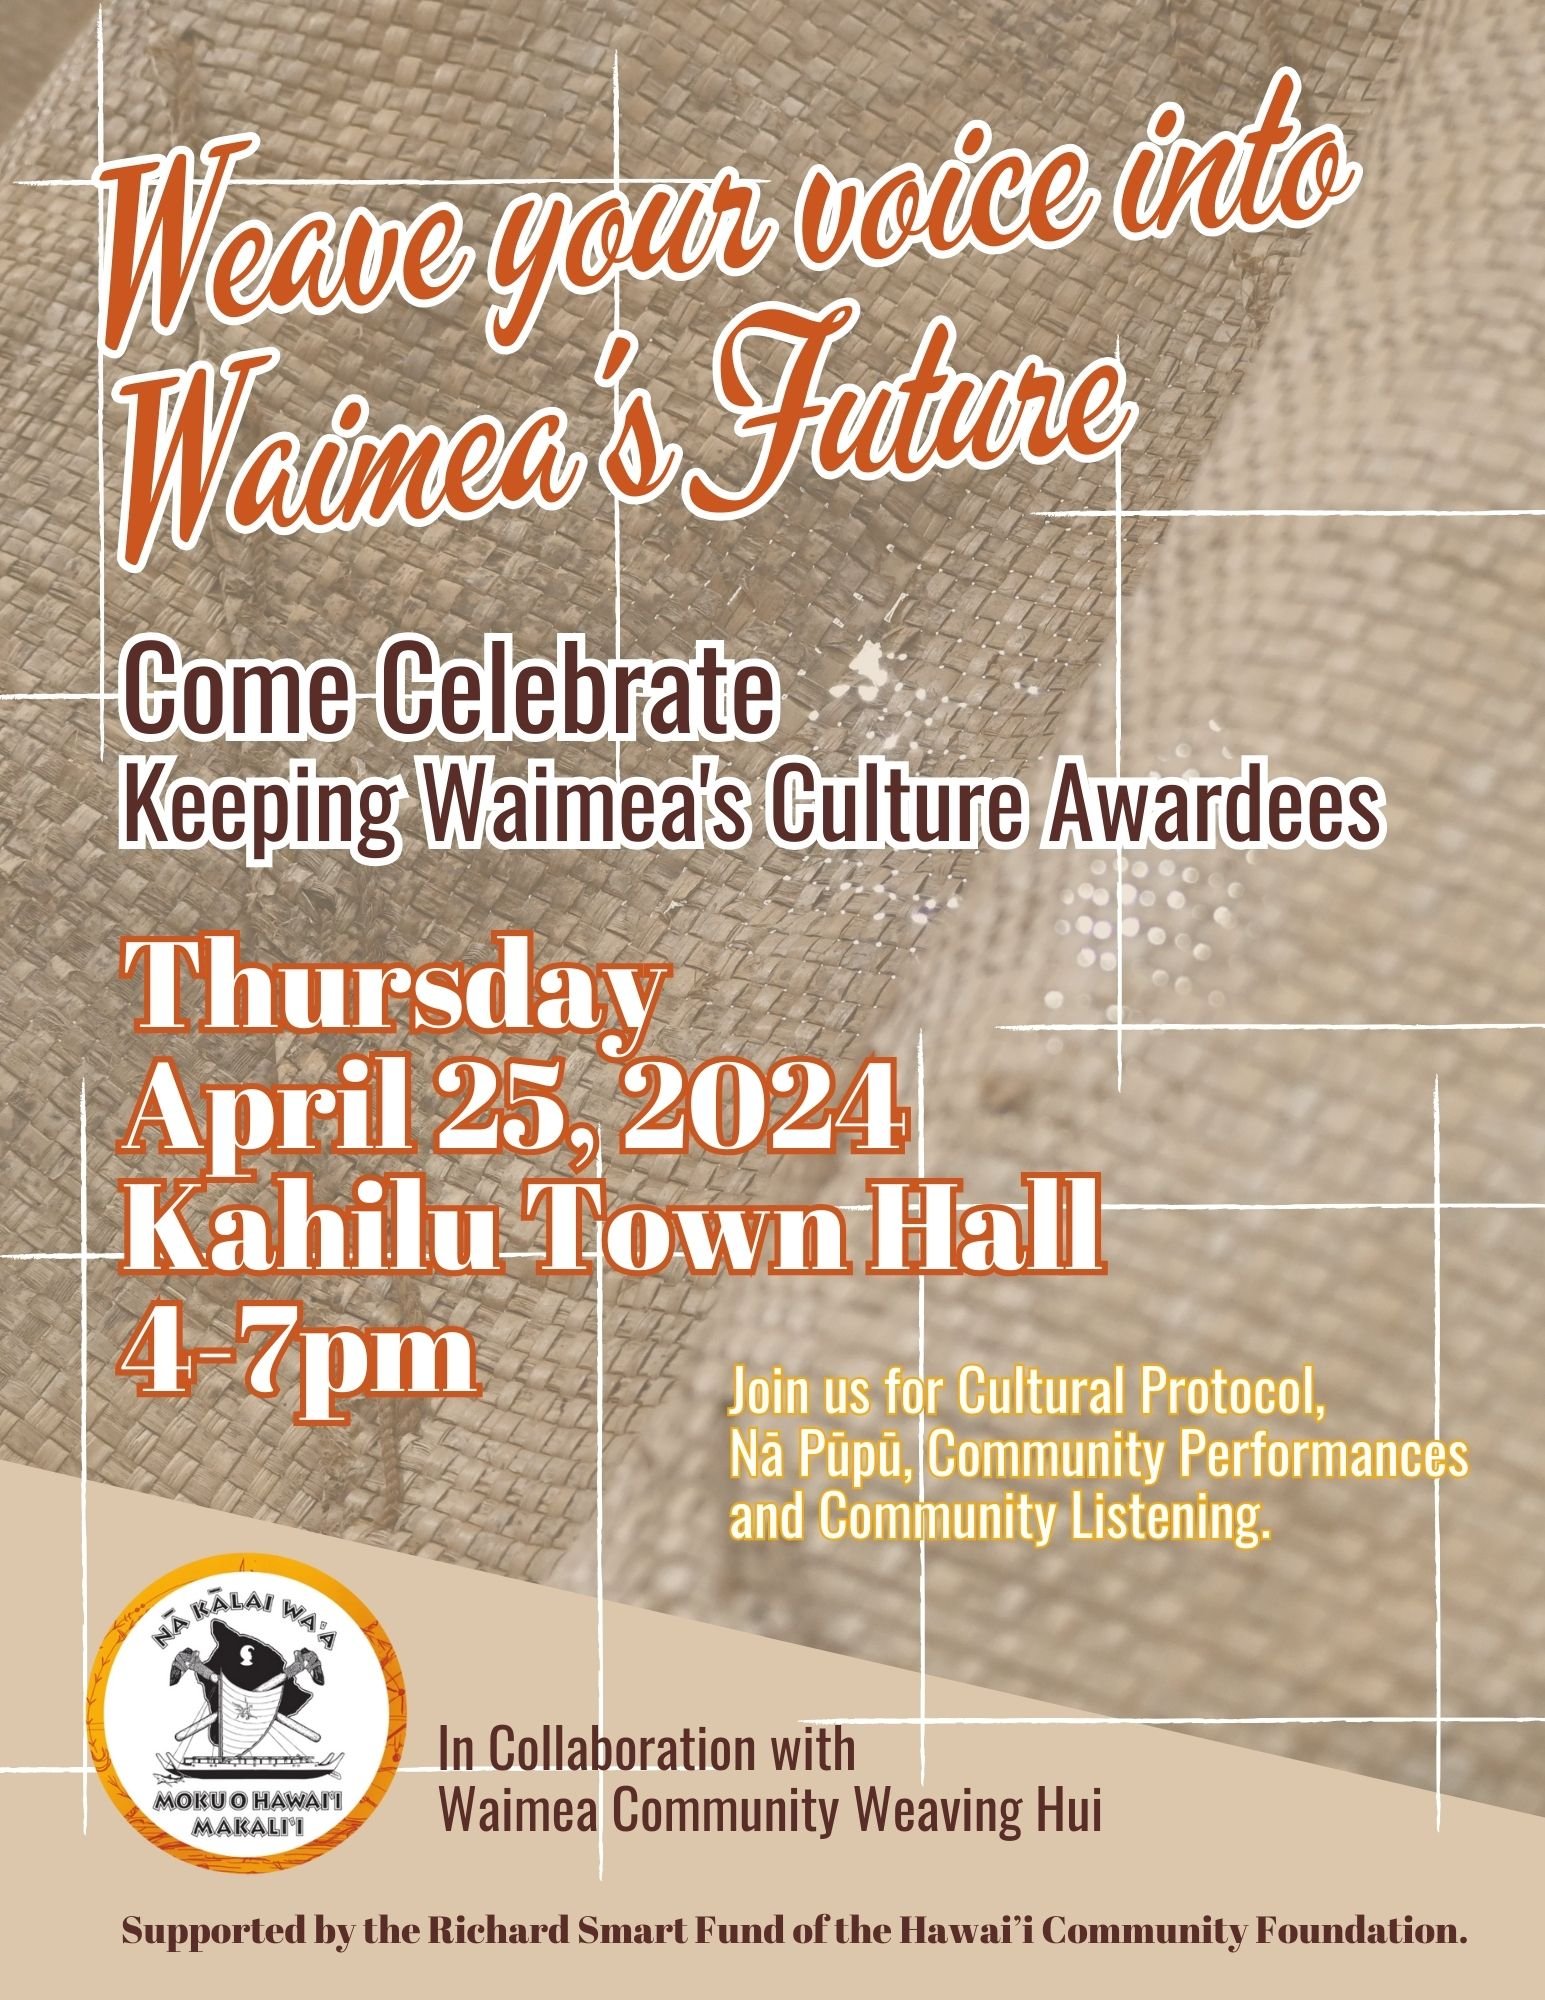 RSF - Waimea Cmty Weaving Hui - Keeping The Culture Awards flier 4-25-24 .jpg